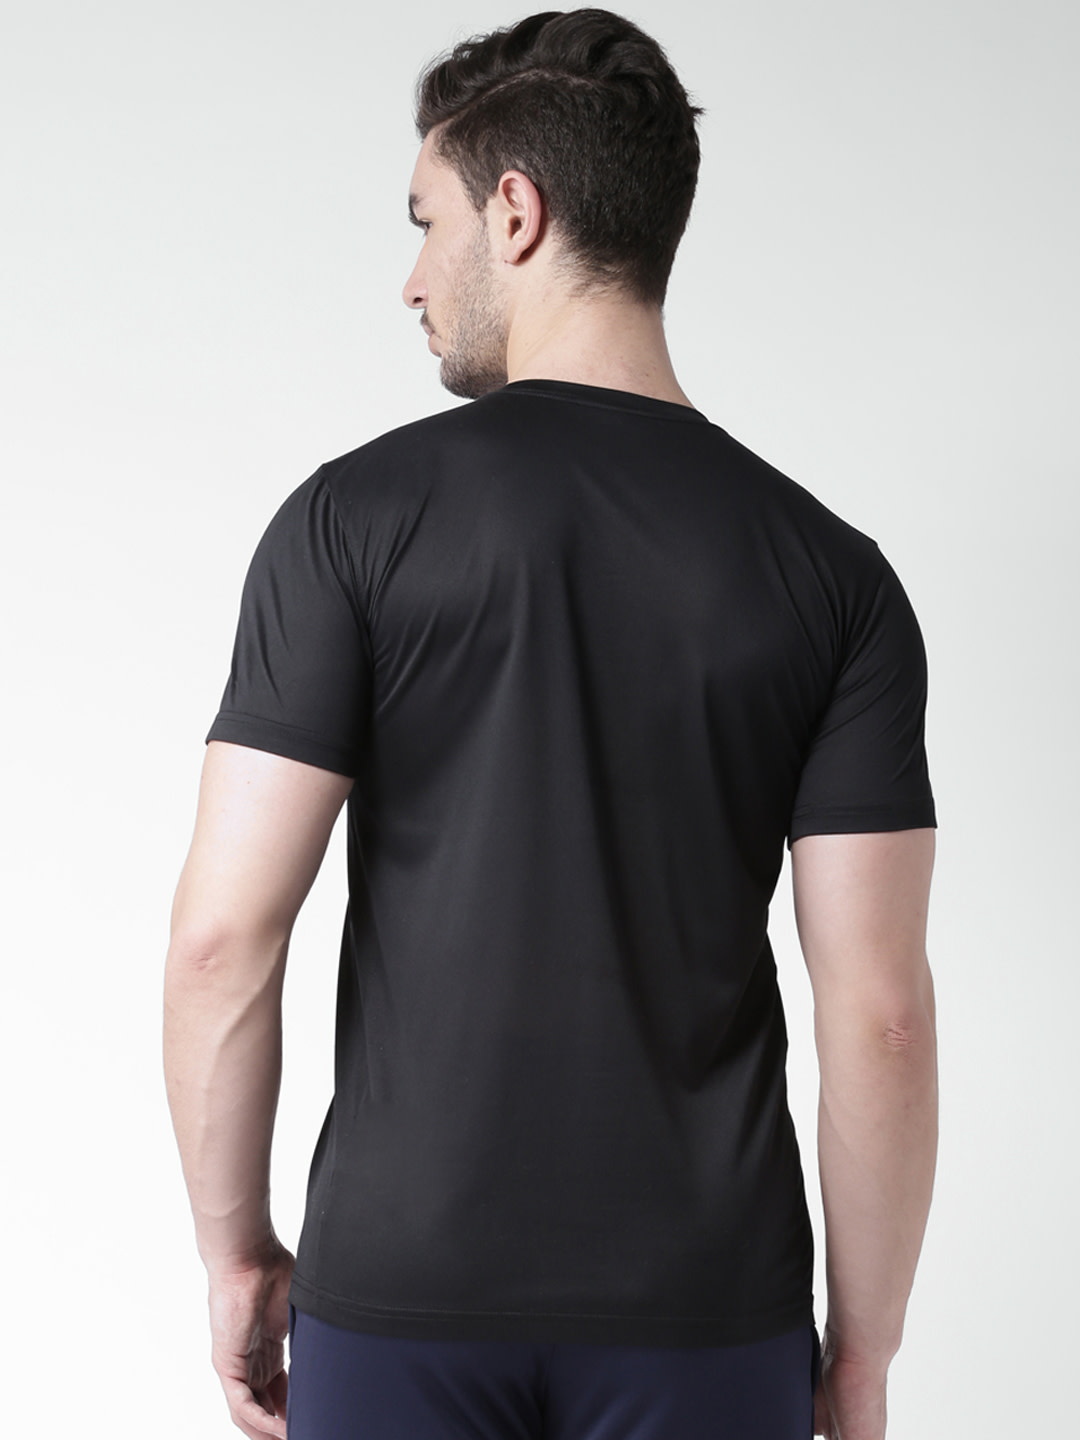 Buy Nike half sleeve mens sports black dry fit t shirt Online - Get 69% Off